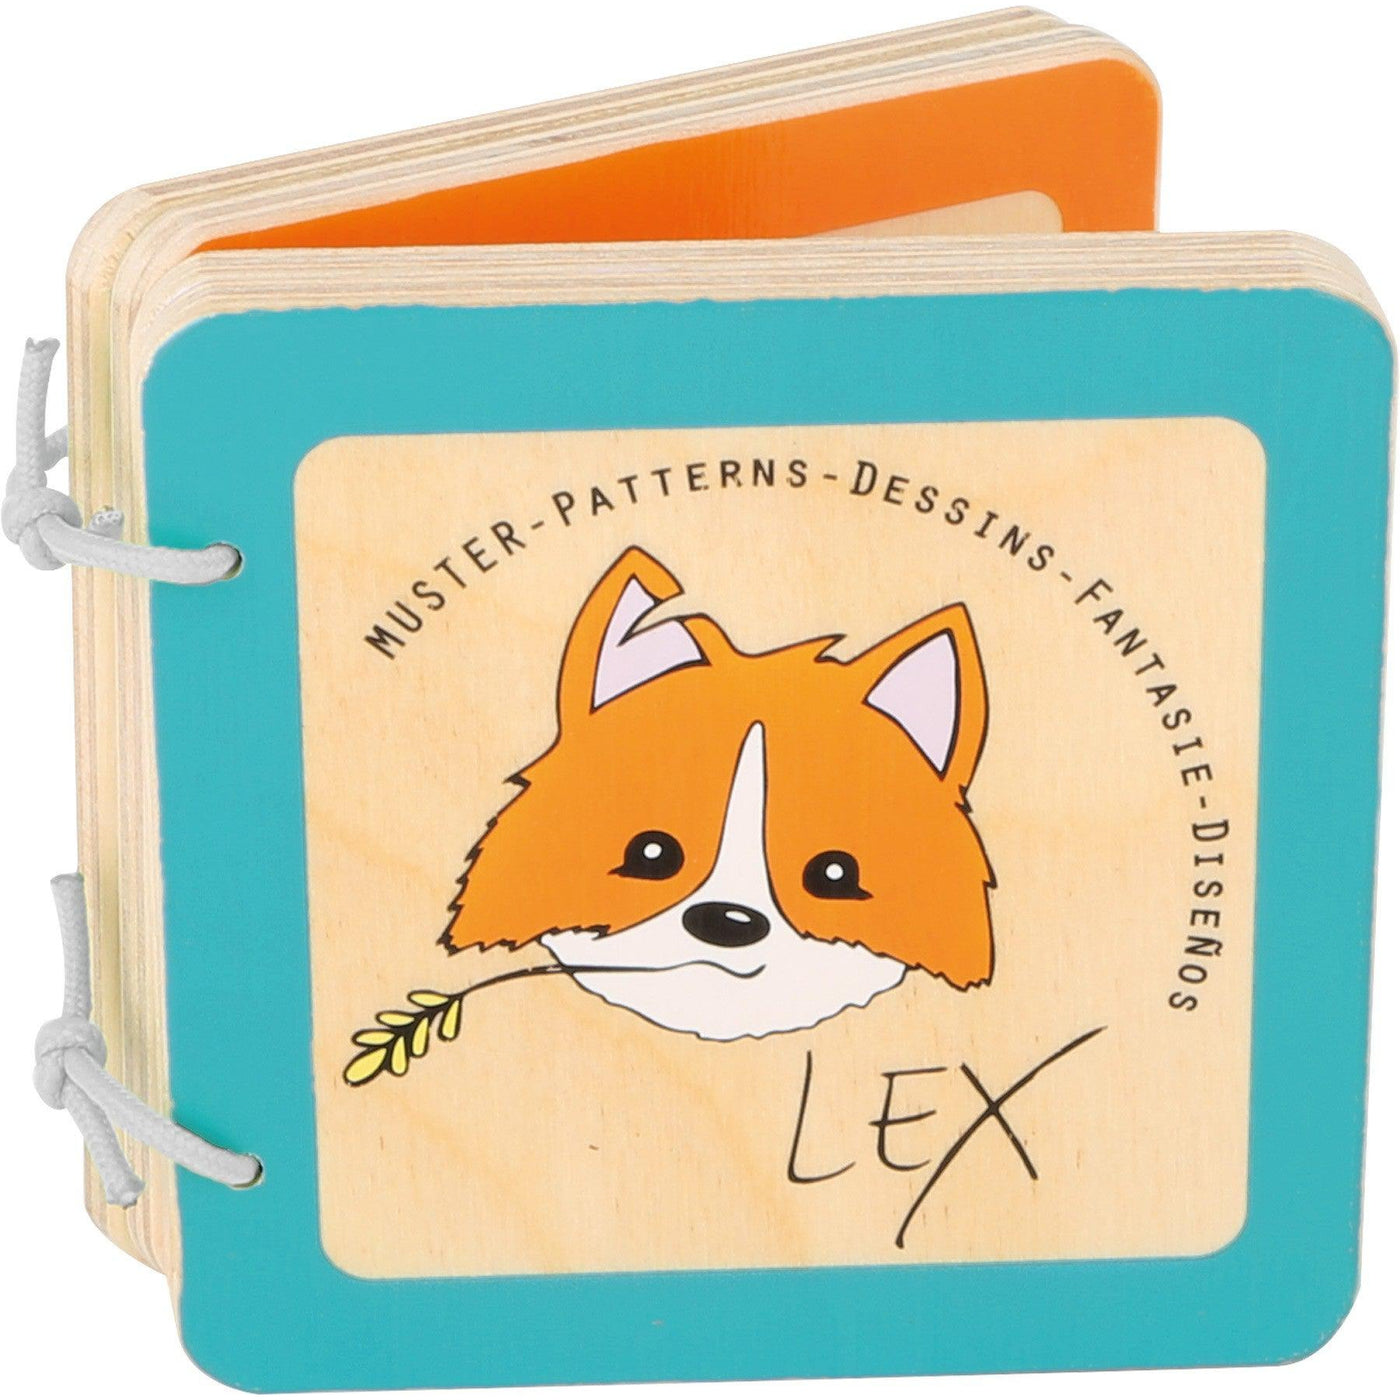 Lex the Fox Baby Book - Patterns